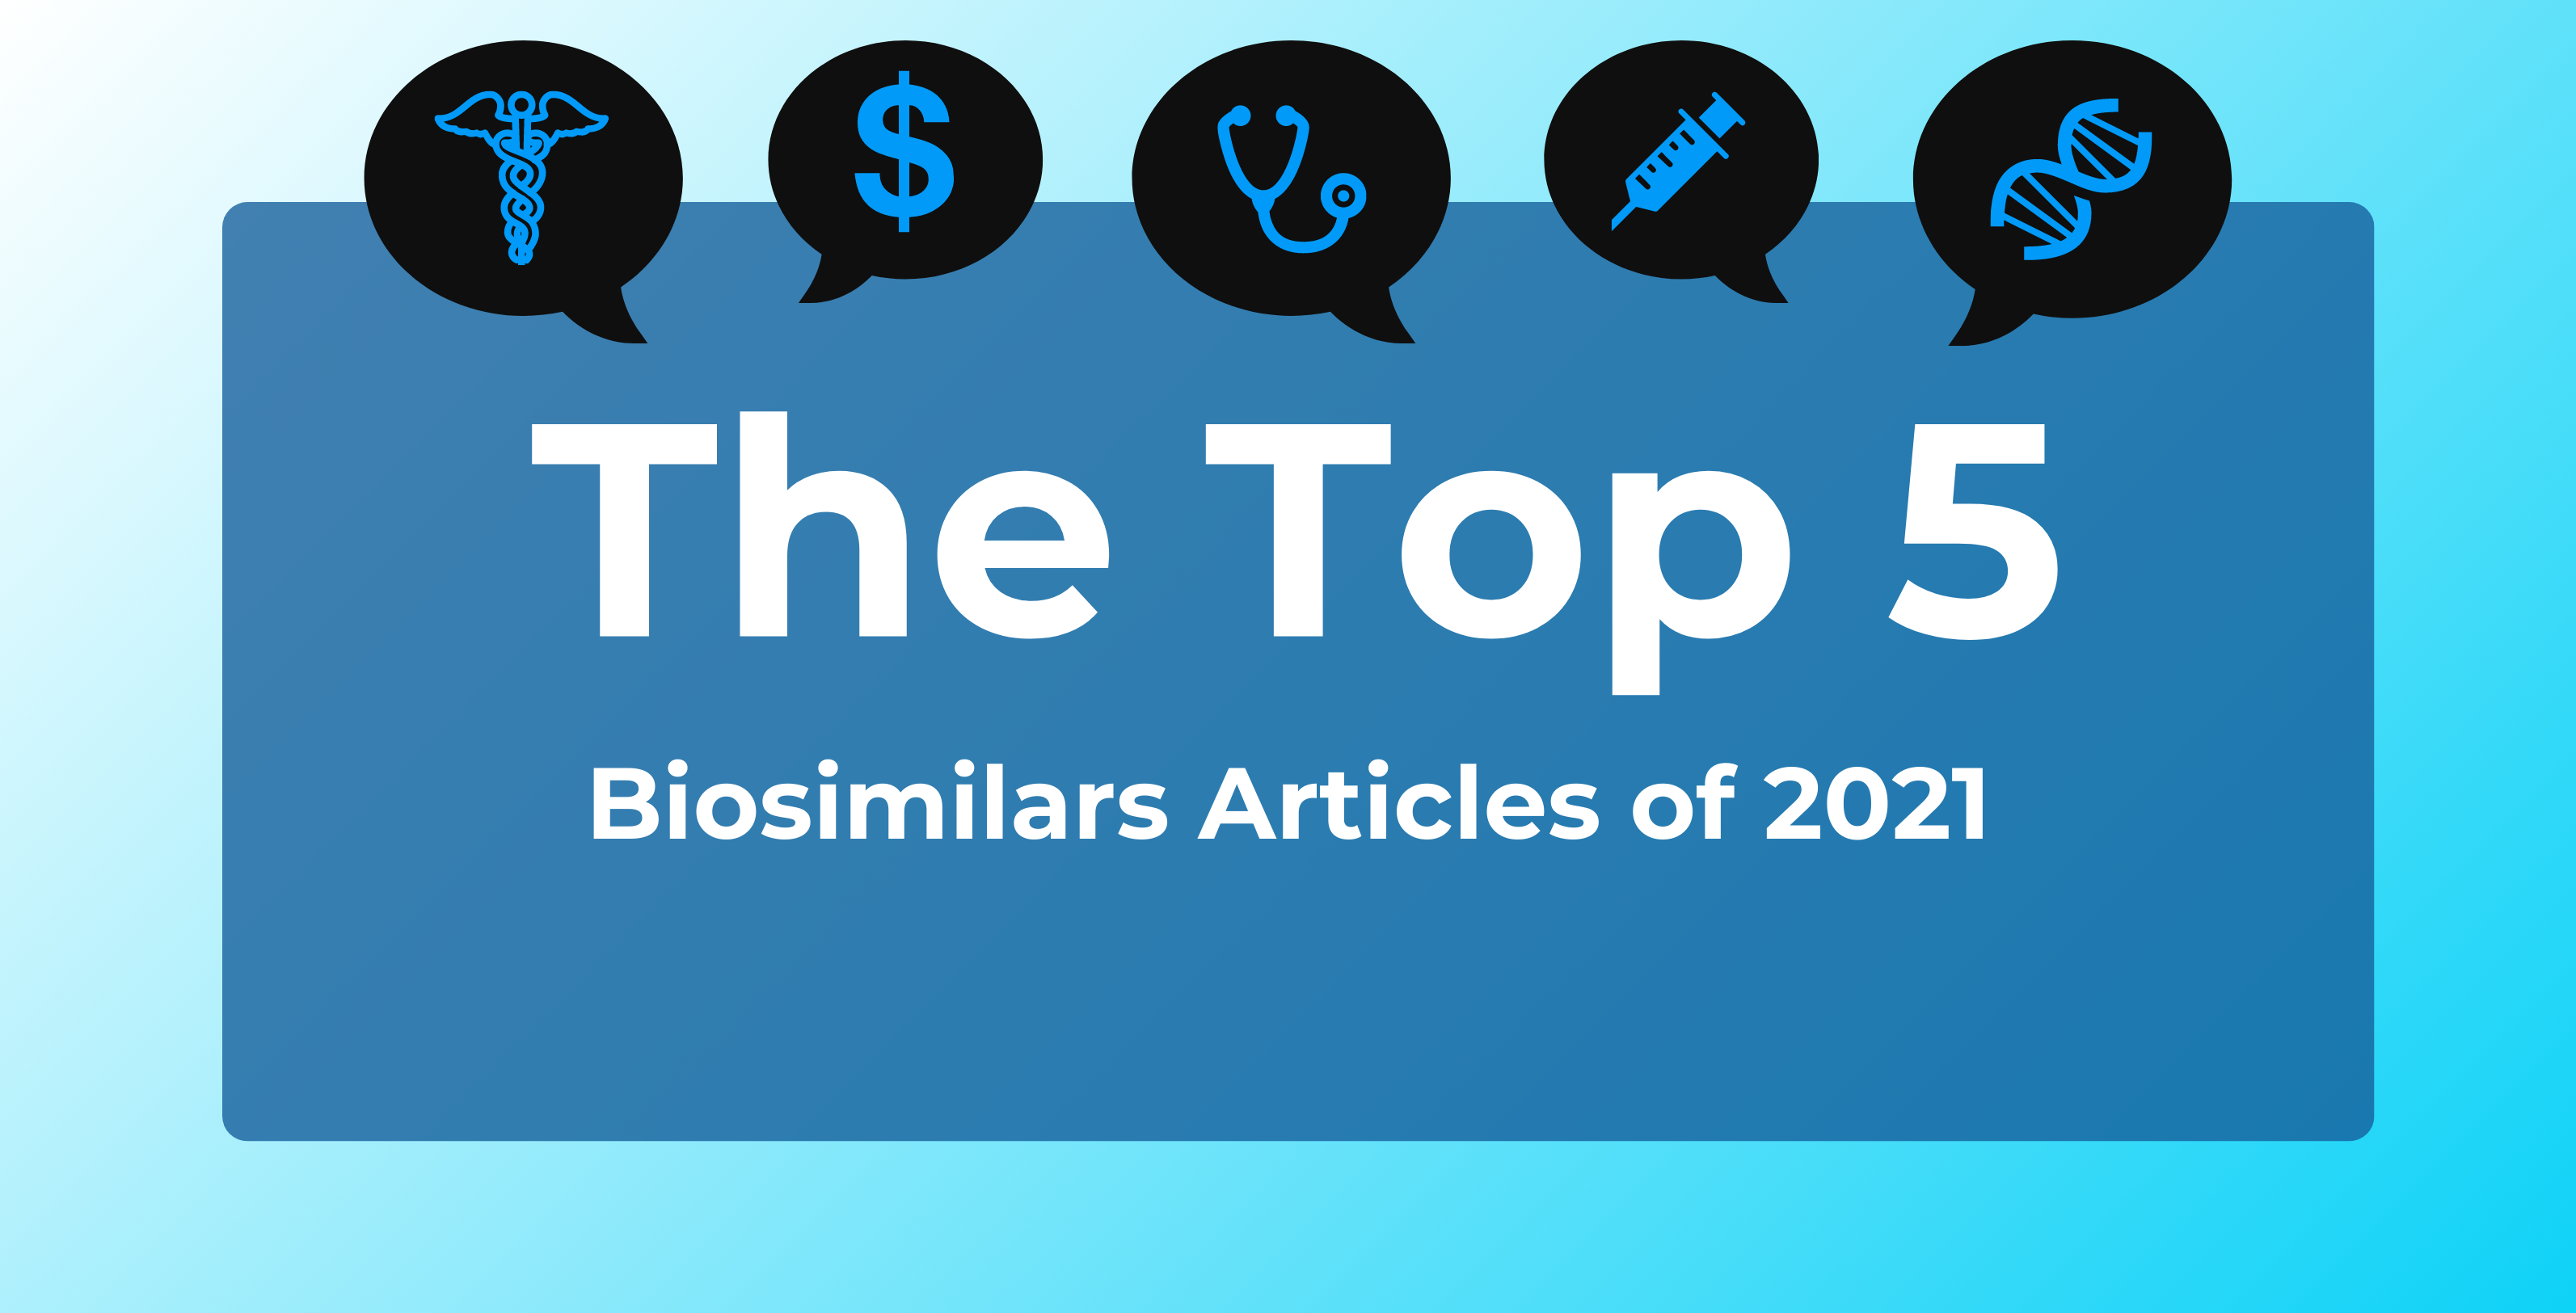 Top biosimilars articles